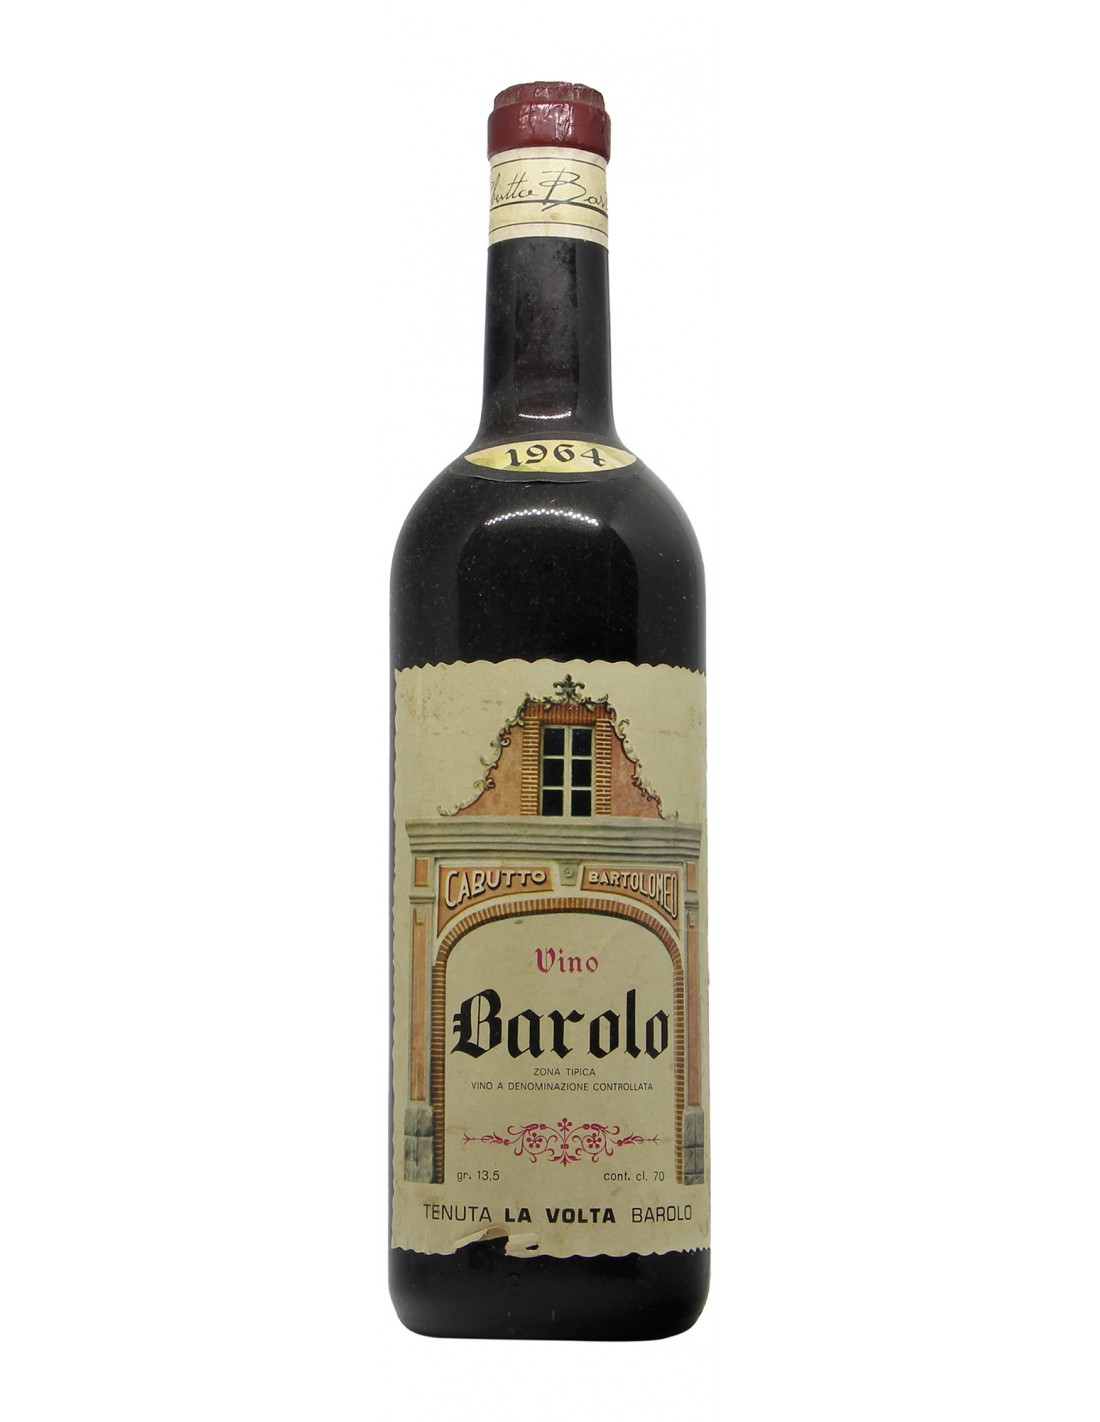 BAROLO 1964 TENUTA LA VOLTA Grandi Bottiglie